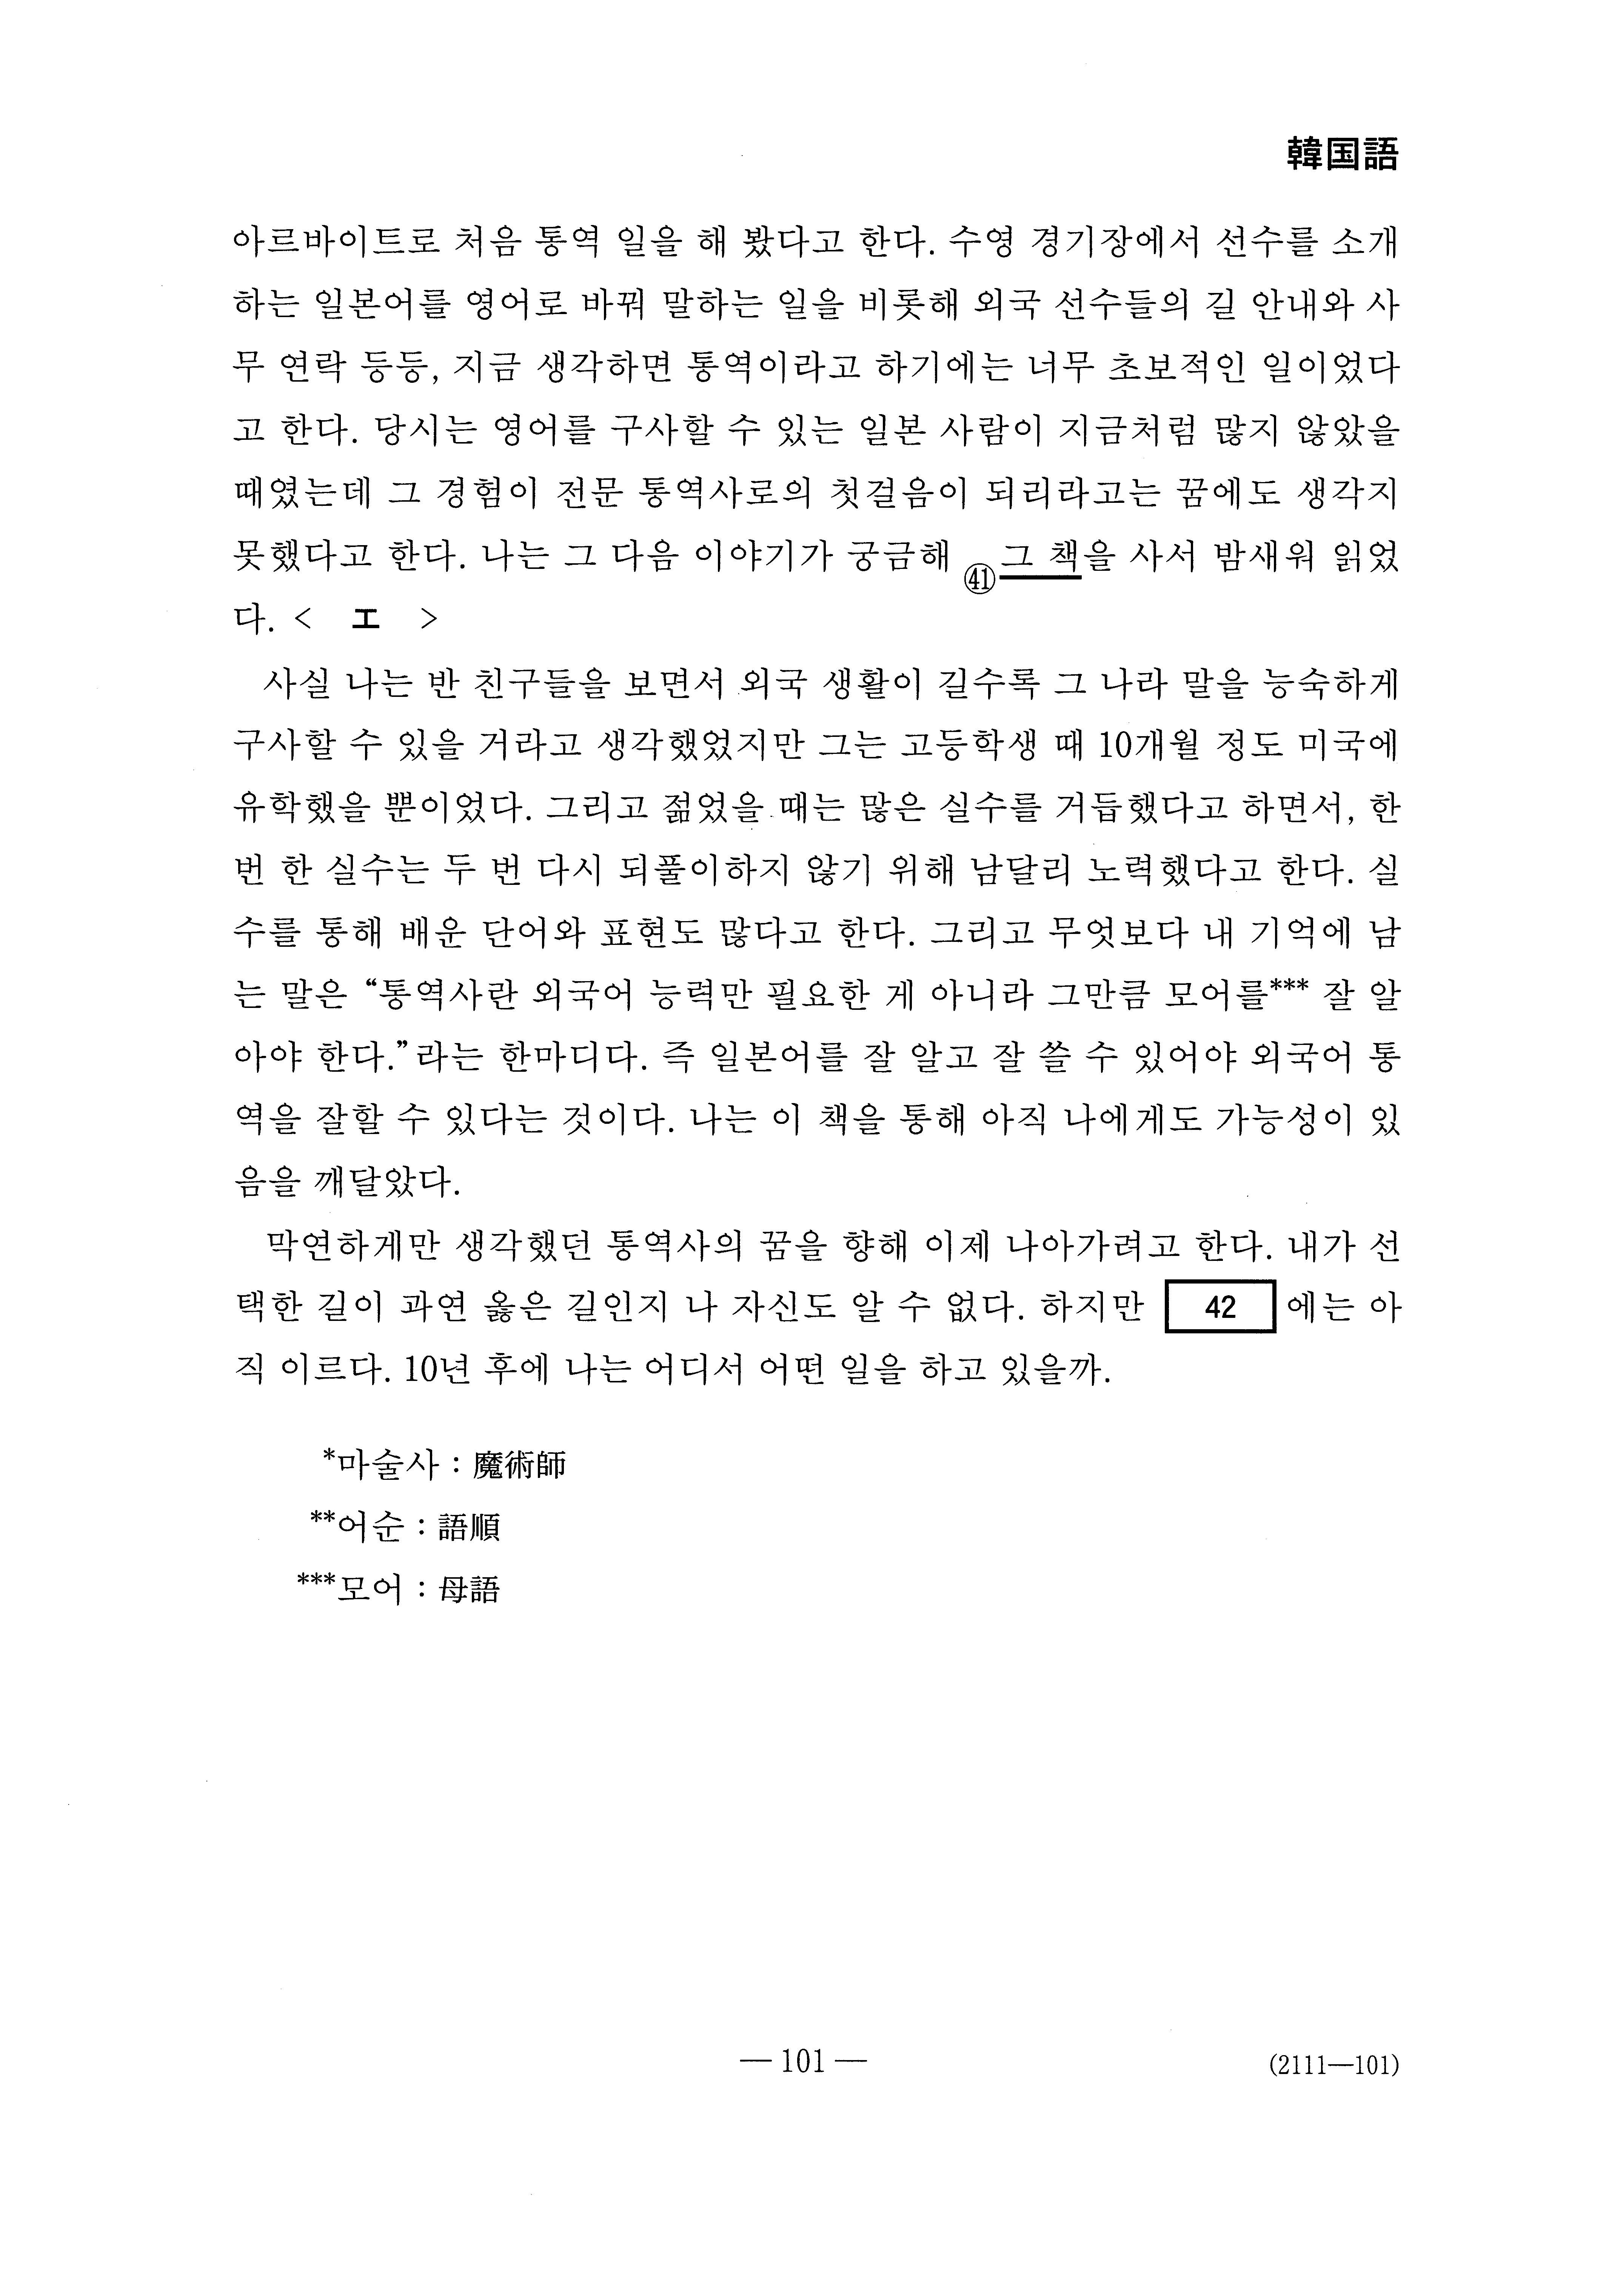 H28外国語 韓国語 大学入試センター試験過去問